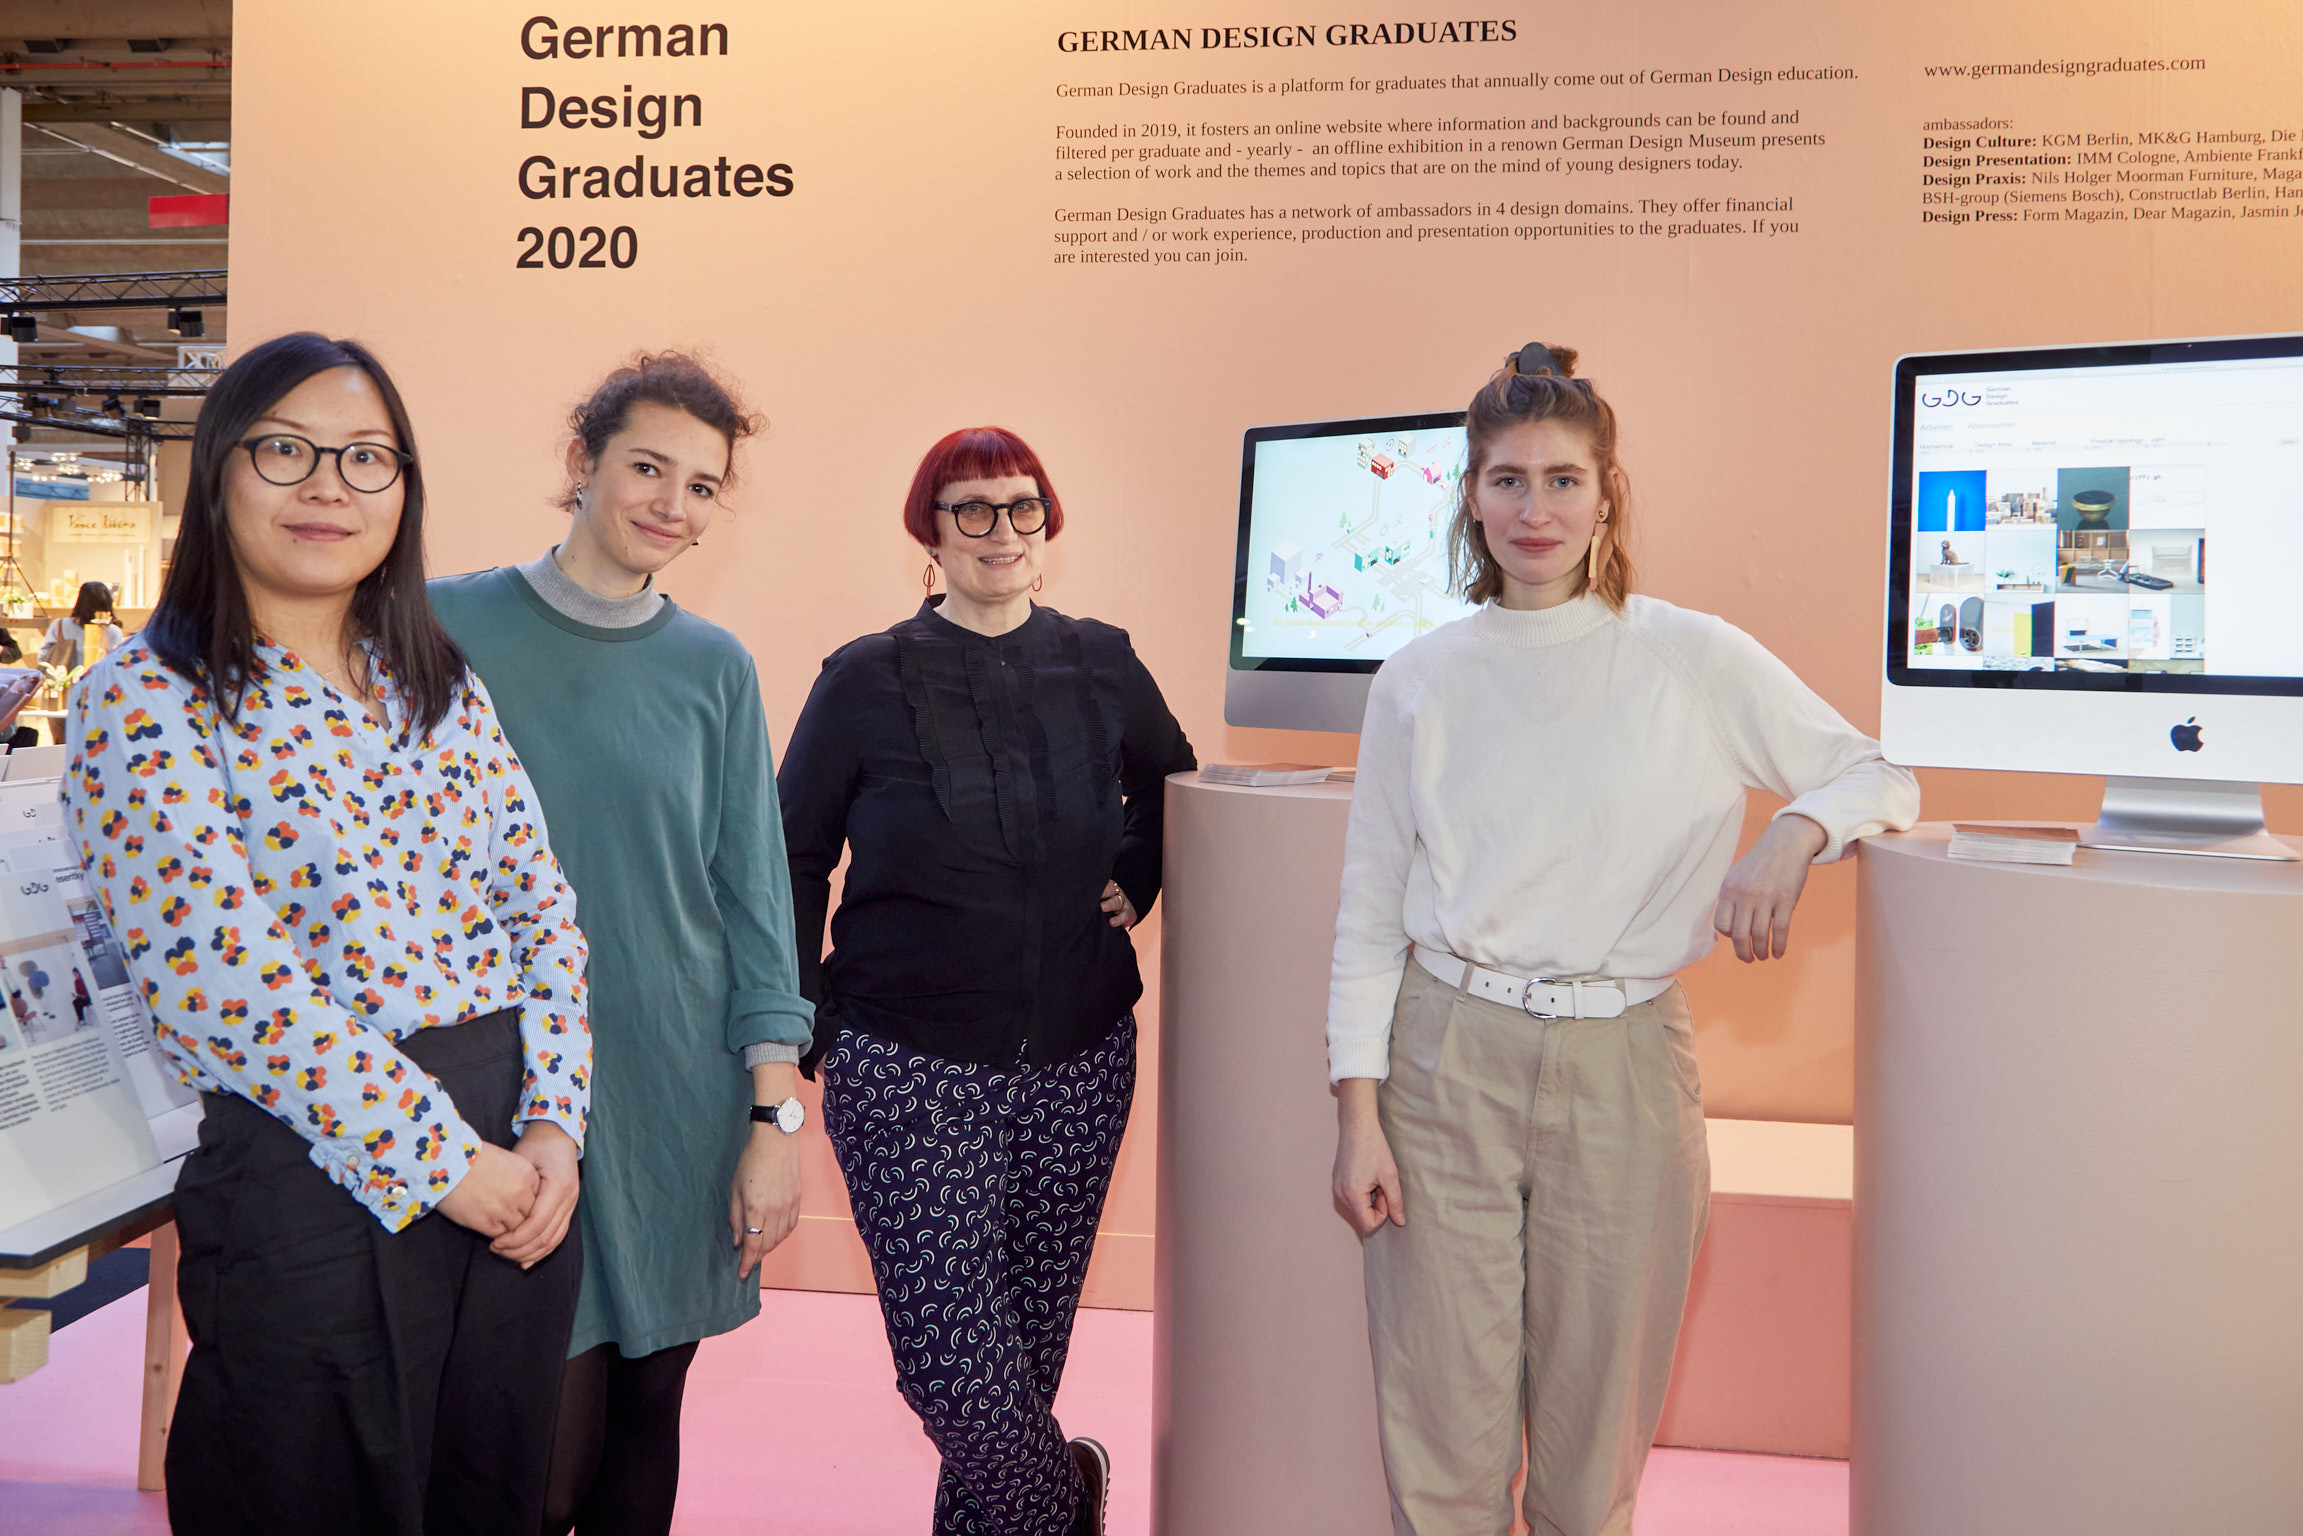 German Design Graduates 2020